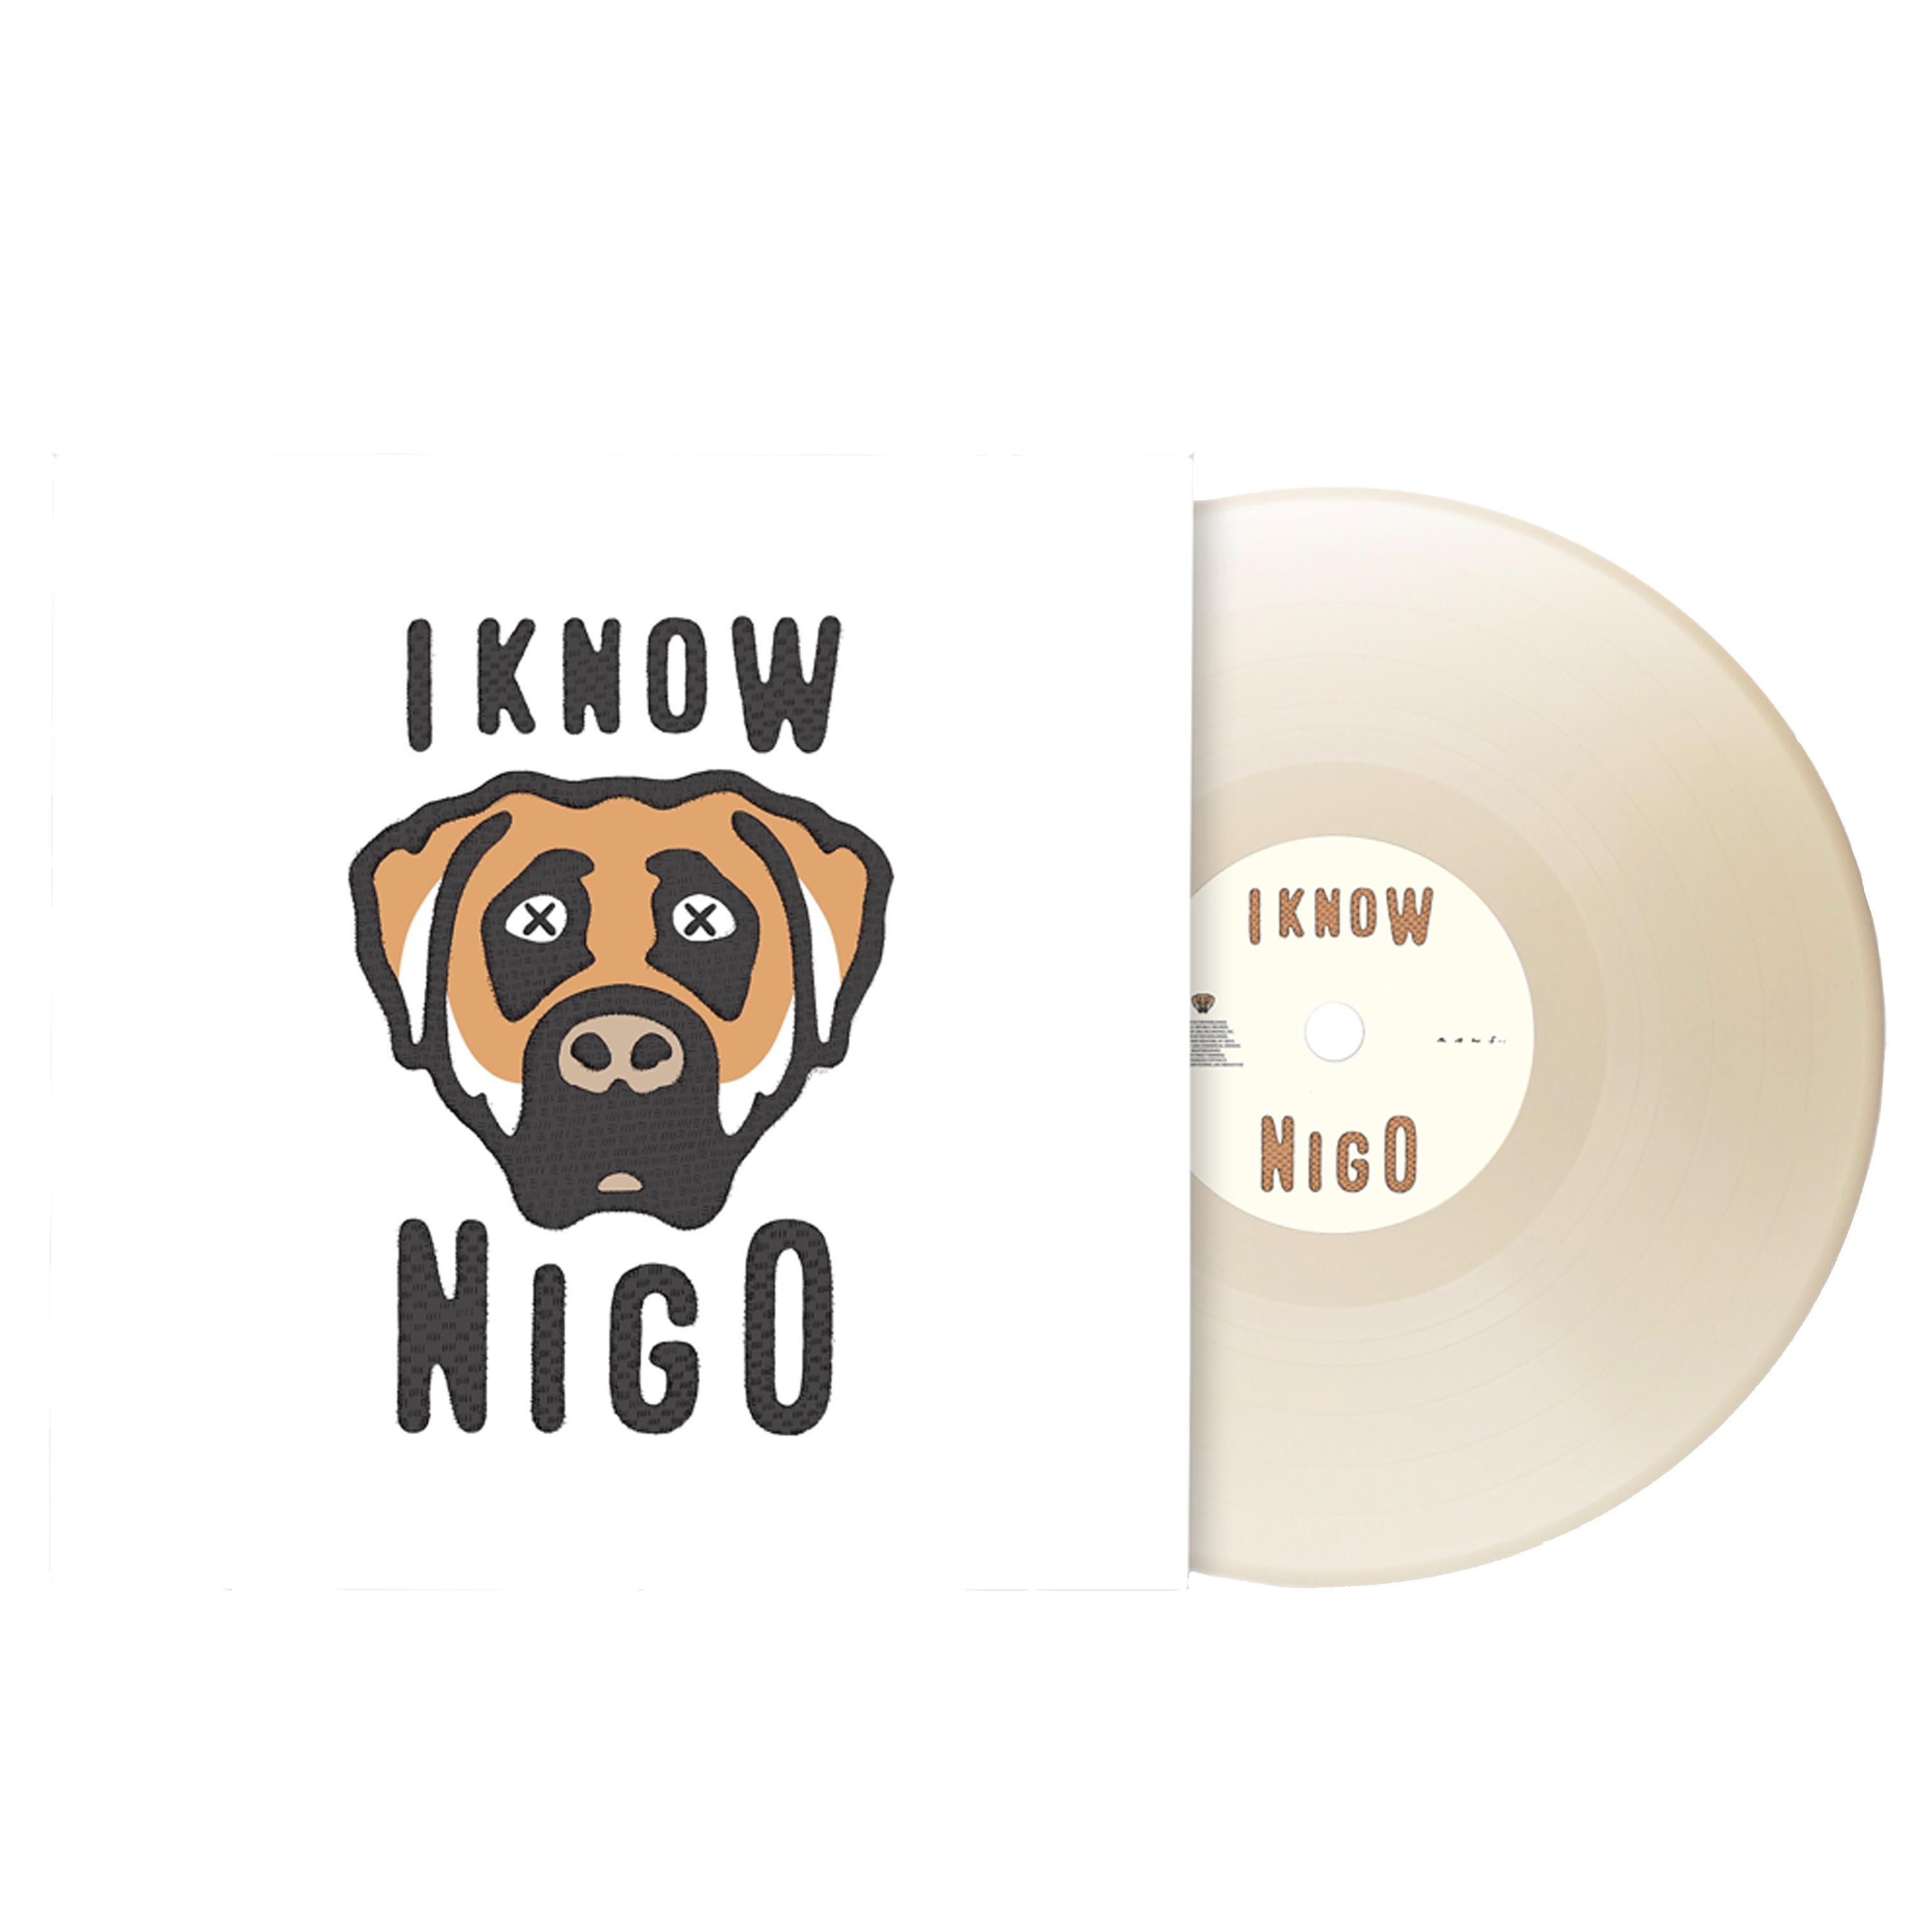 I KNOW NIGO' Album Tracklist: A$AP Rocky, Lil Uzi Vert, Pusha T